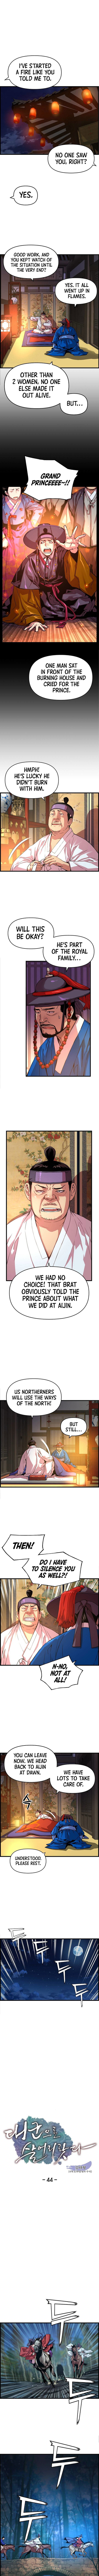 I Shall Live As a Prince Chapter 44 page 2